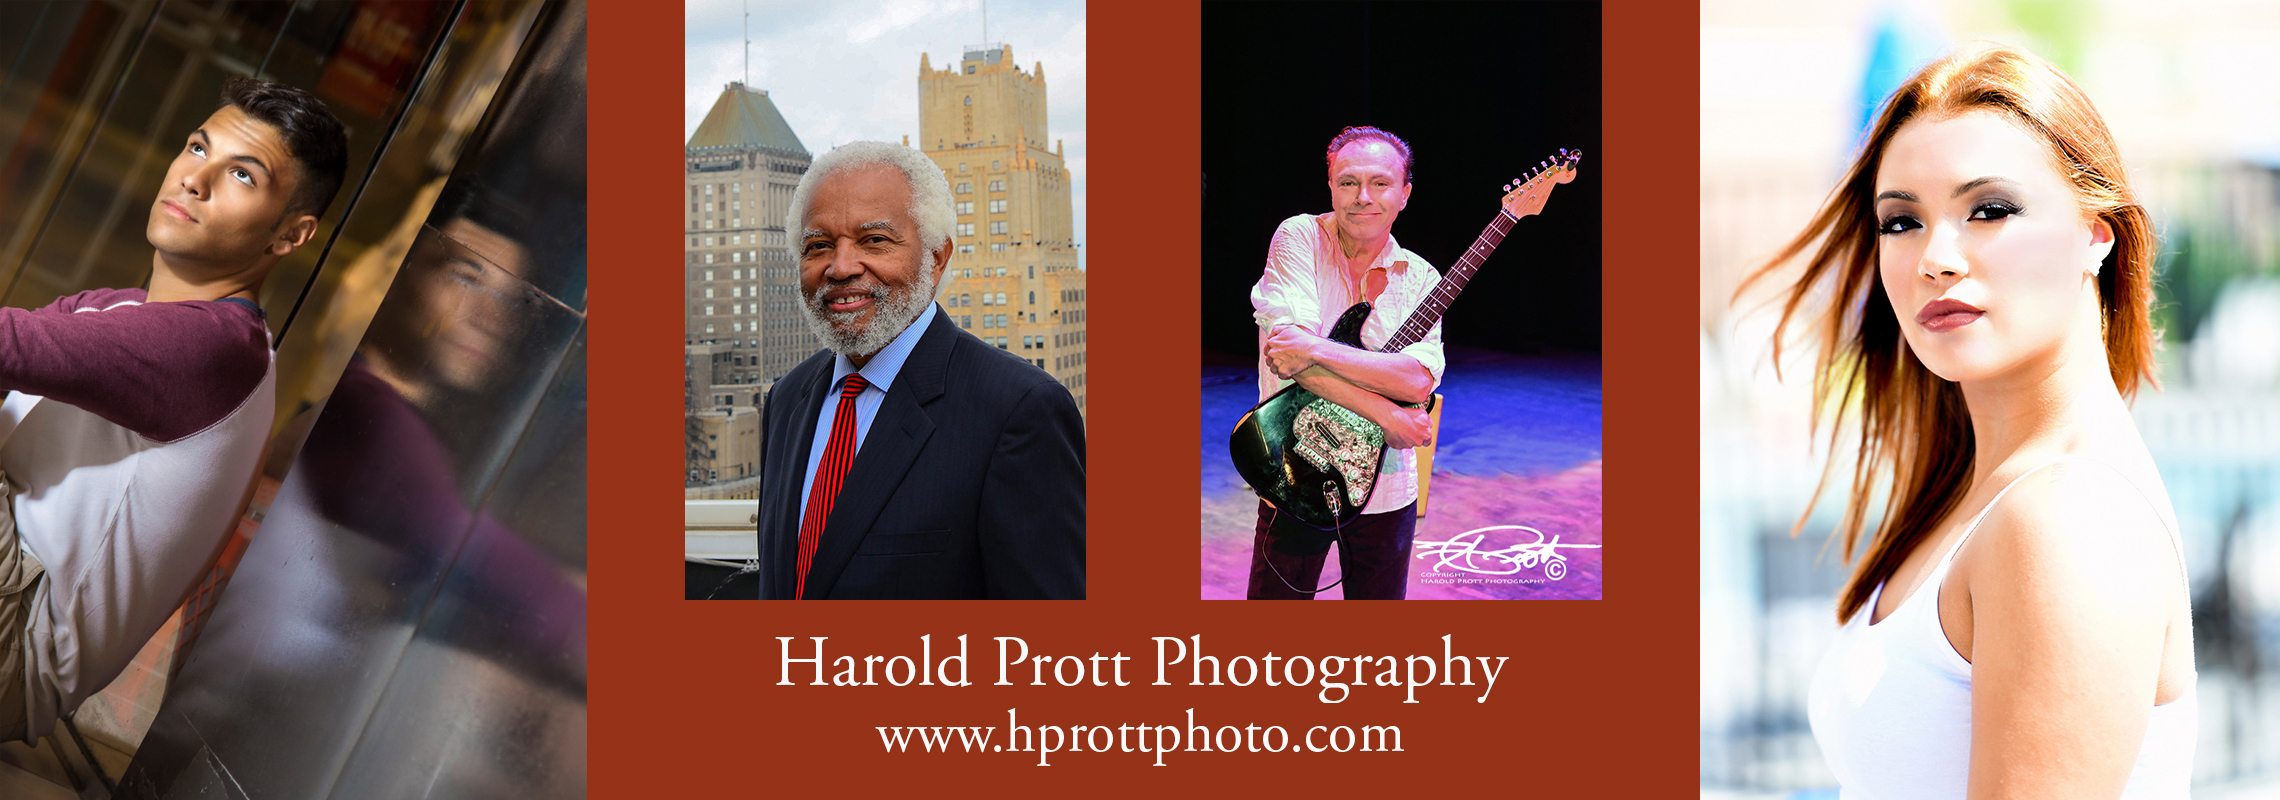 harold-prott-photo-footer